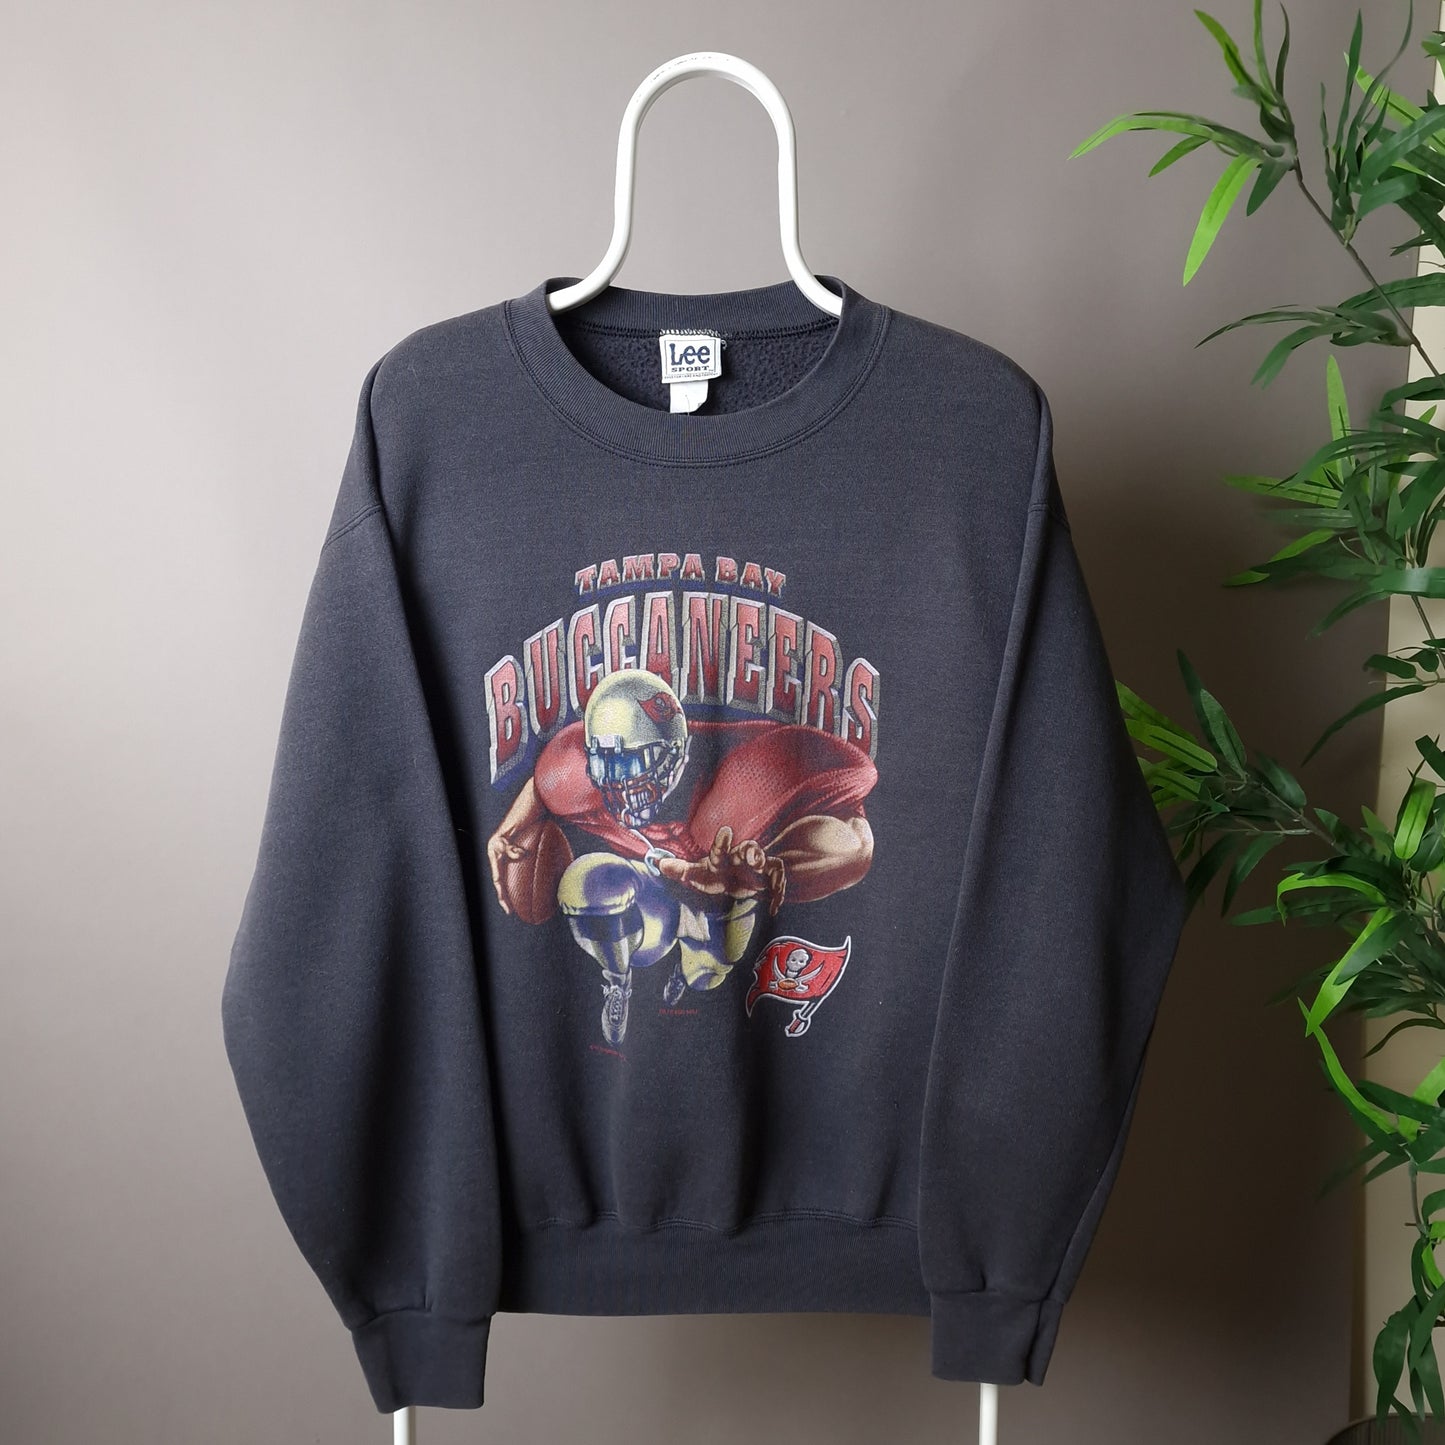 Vintage tampa bay buccaneers graphic sweatshirt - medium